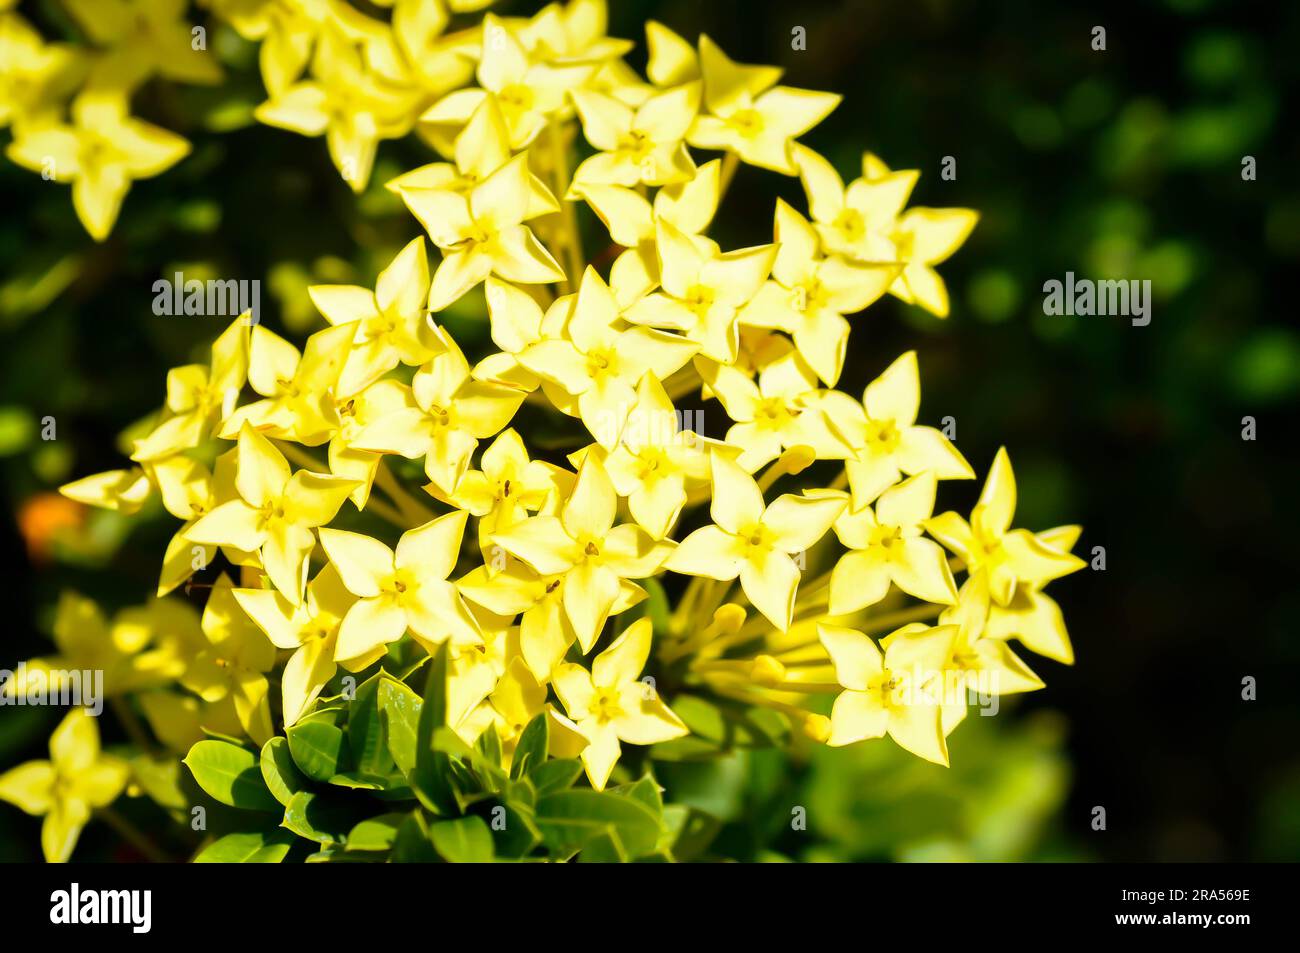 Ixora chinensis Lamk, Ixora spp or Zephyranthes or West Indian Jasmine or yellow flower Stock Photo